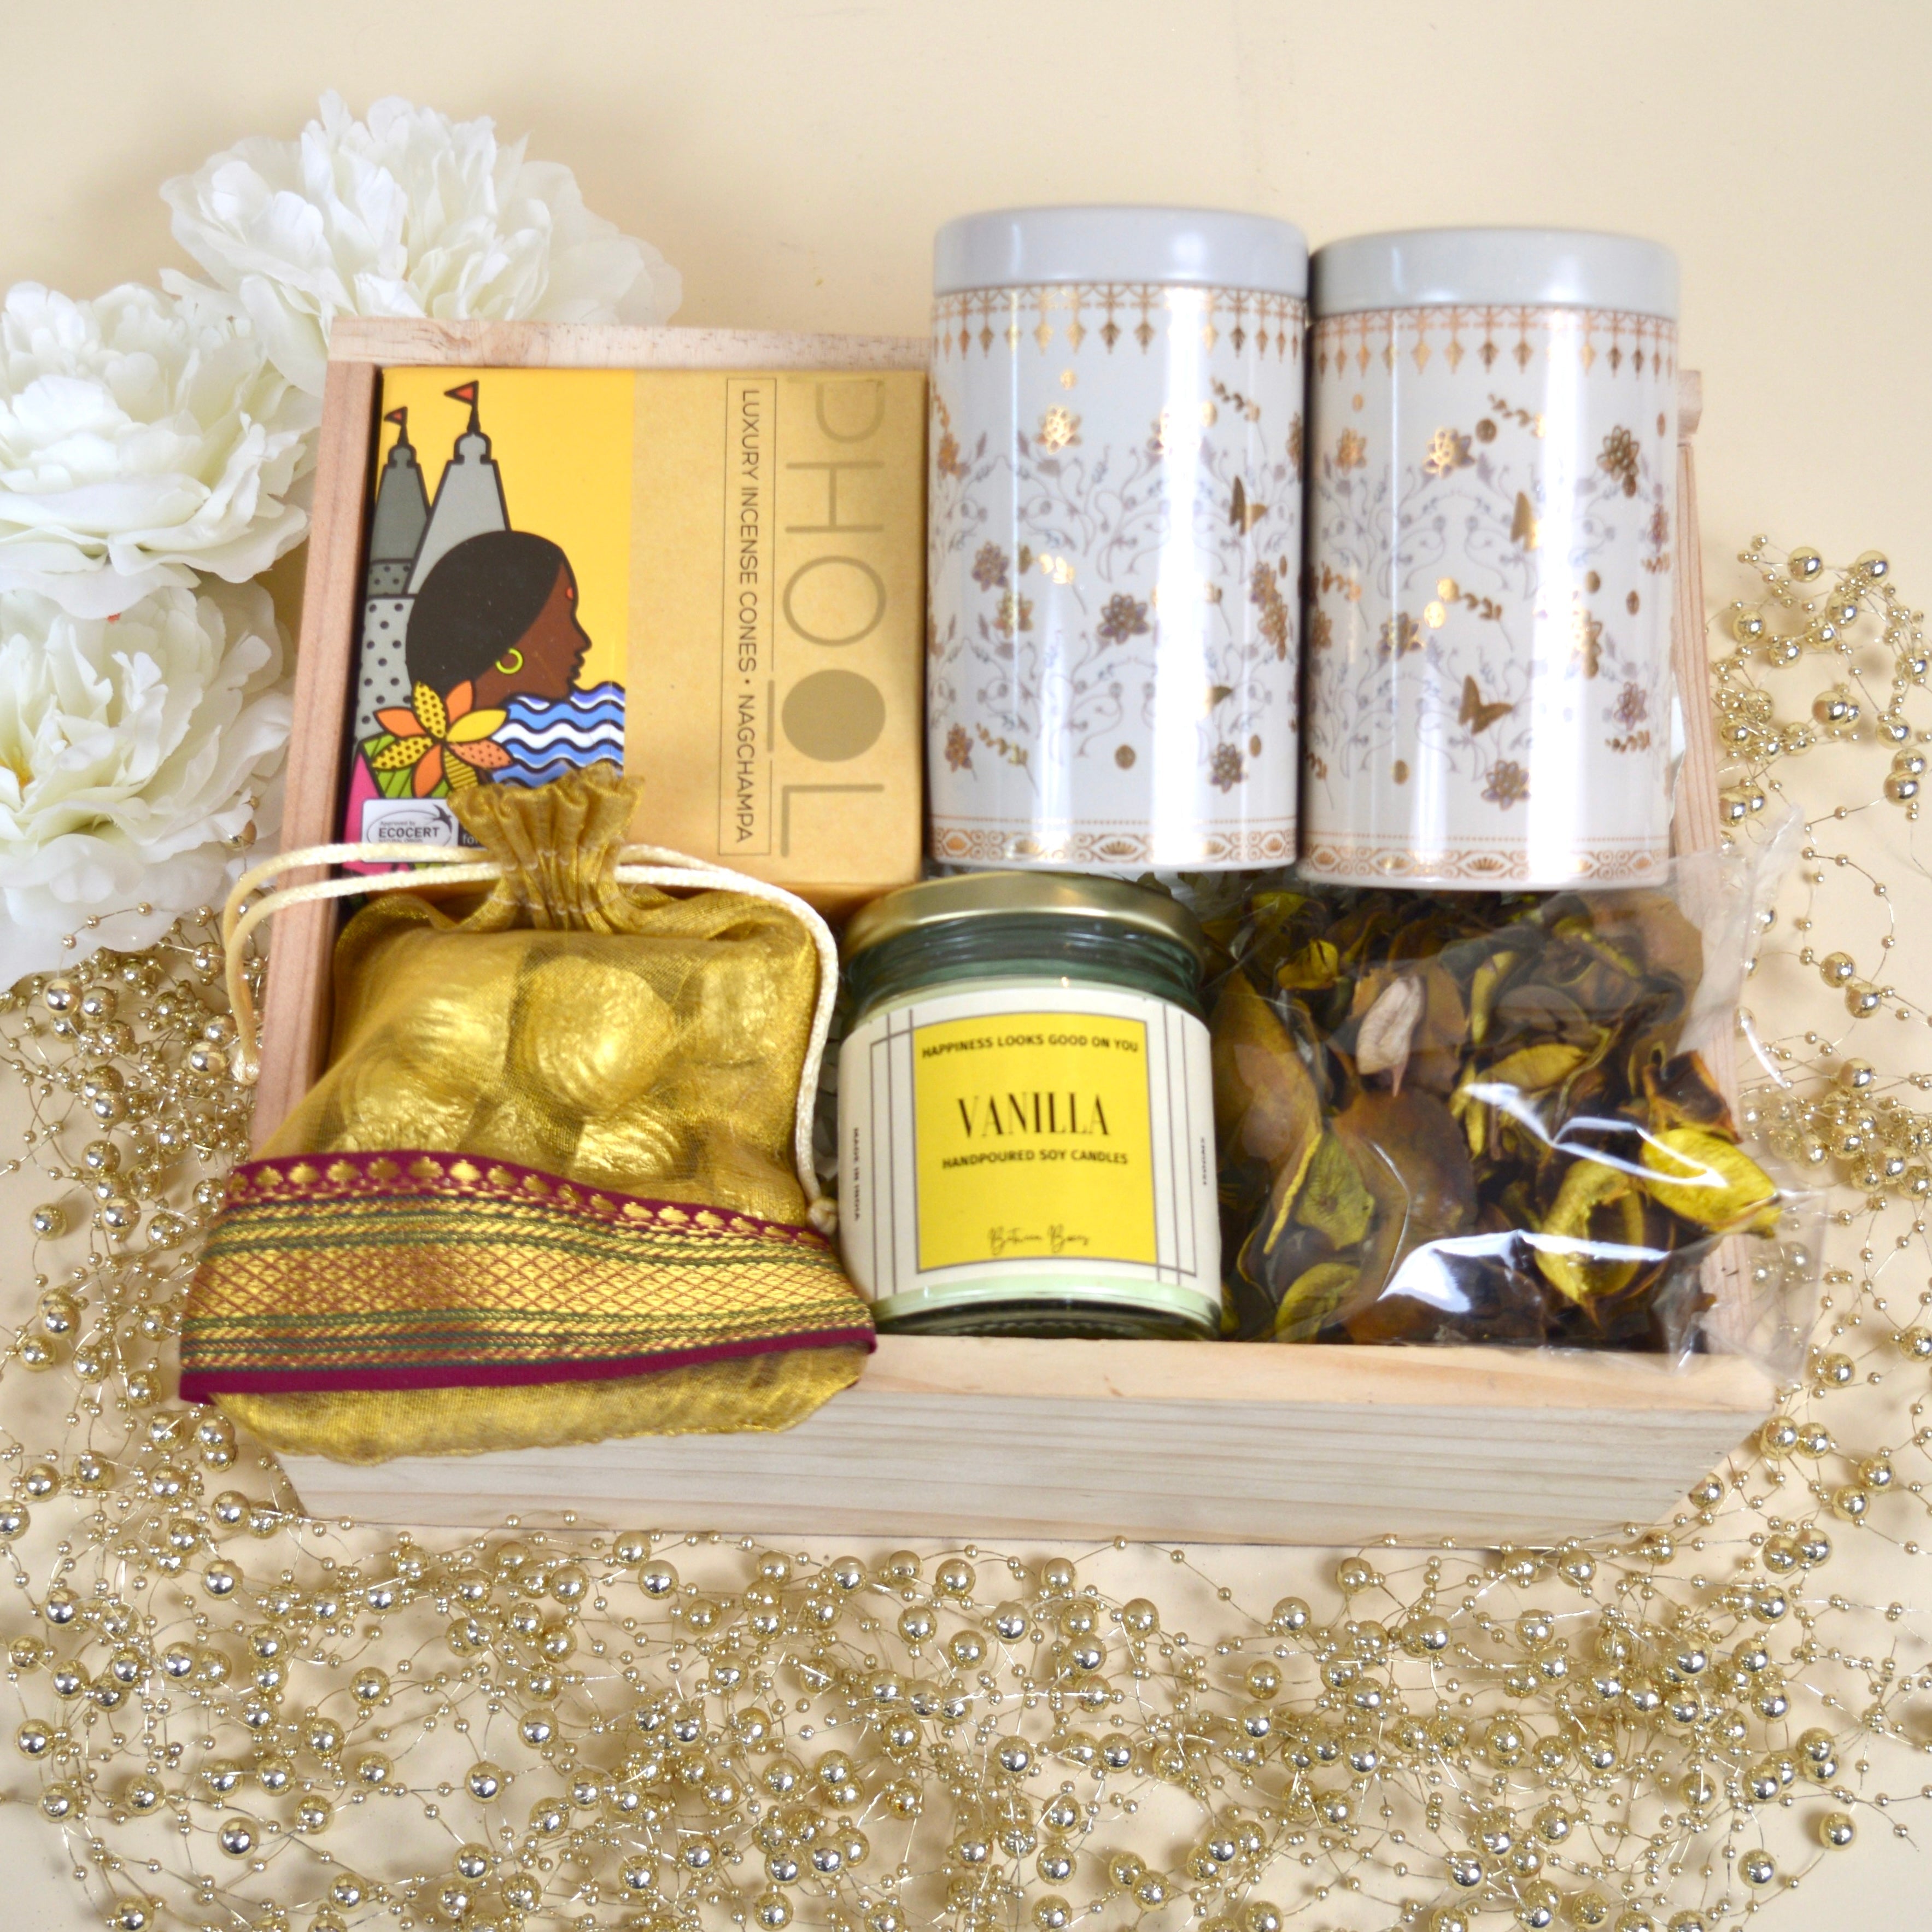 Diwali Gift Ideas: Gift some nice tea hampers this Diwali